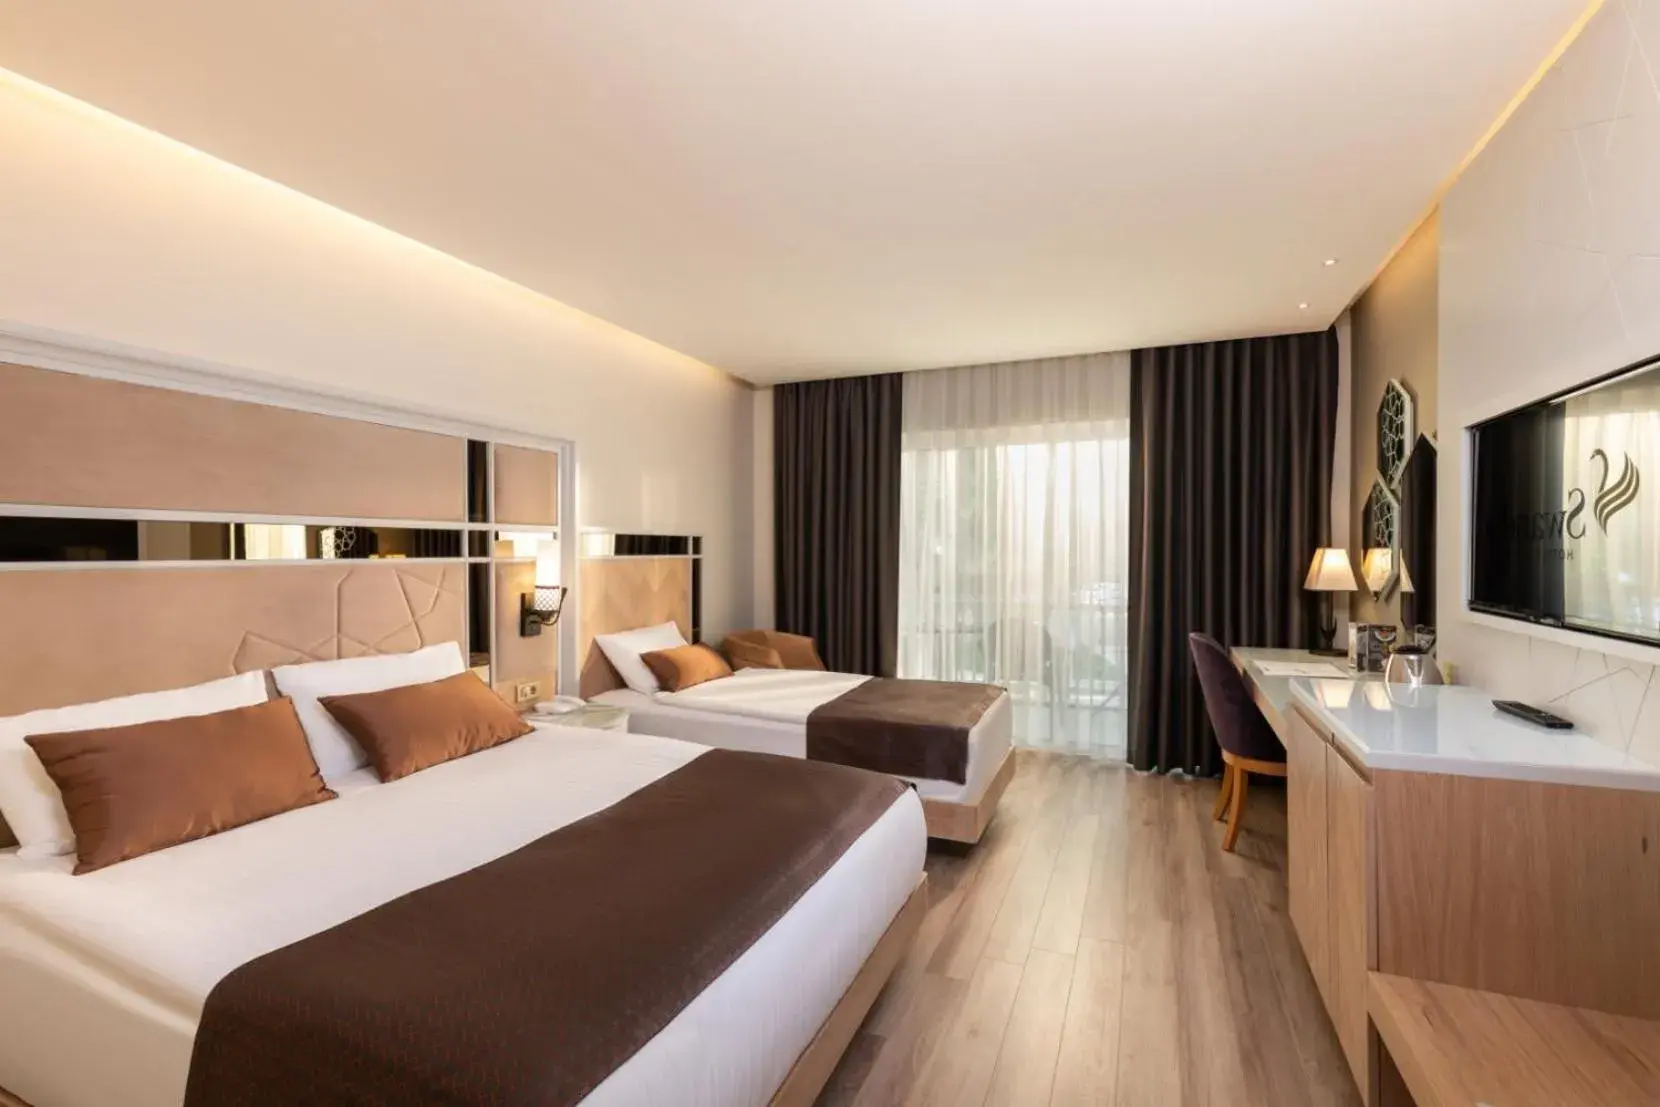 Bedroom in Swandor Hotels & Resorts - Topkapi Palace